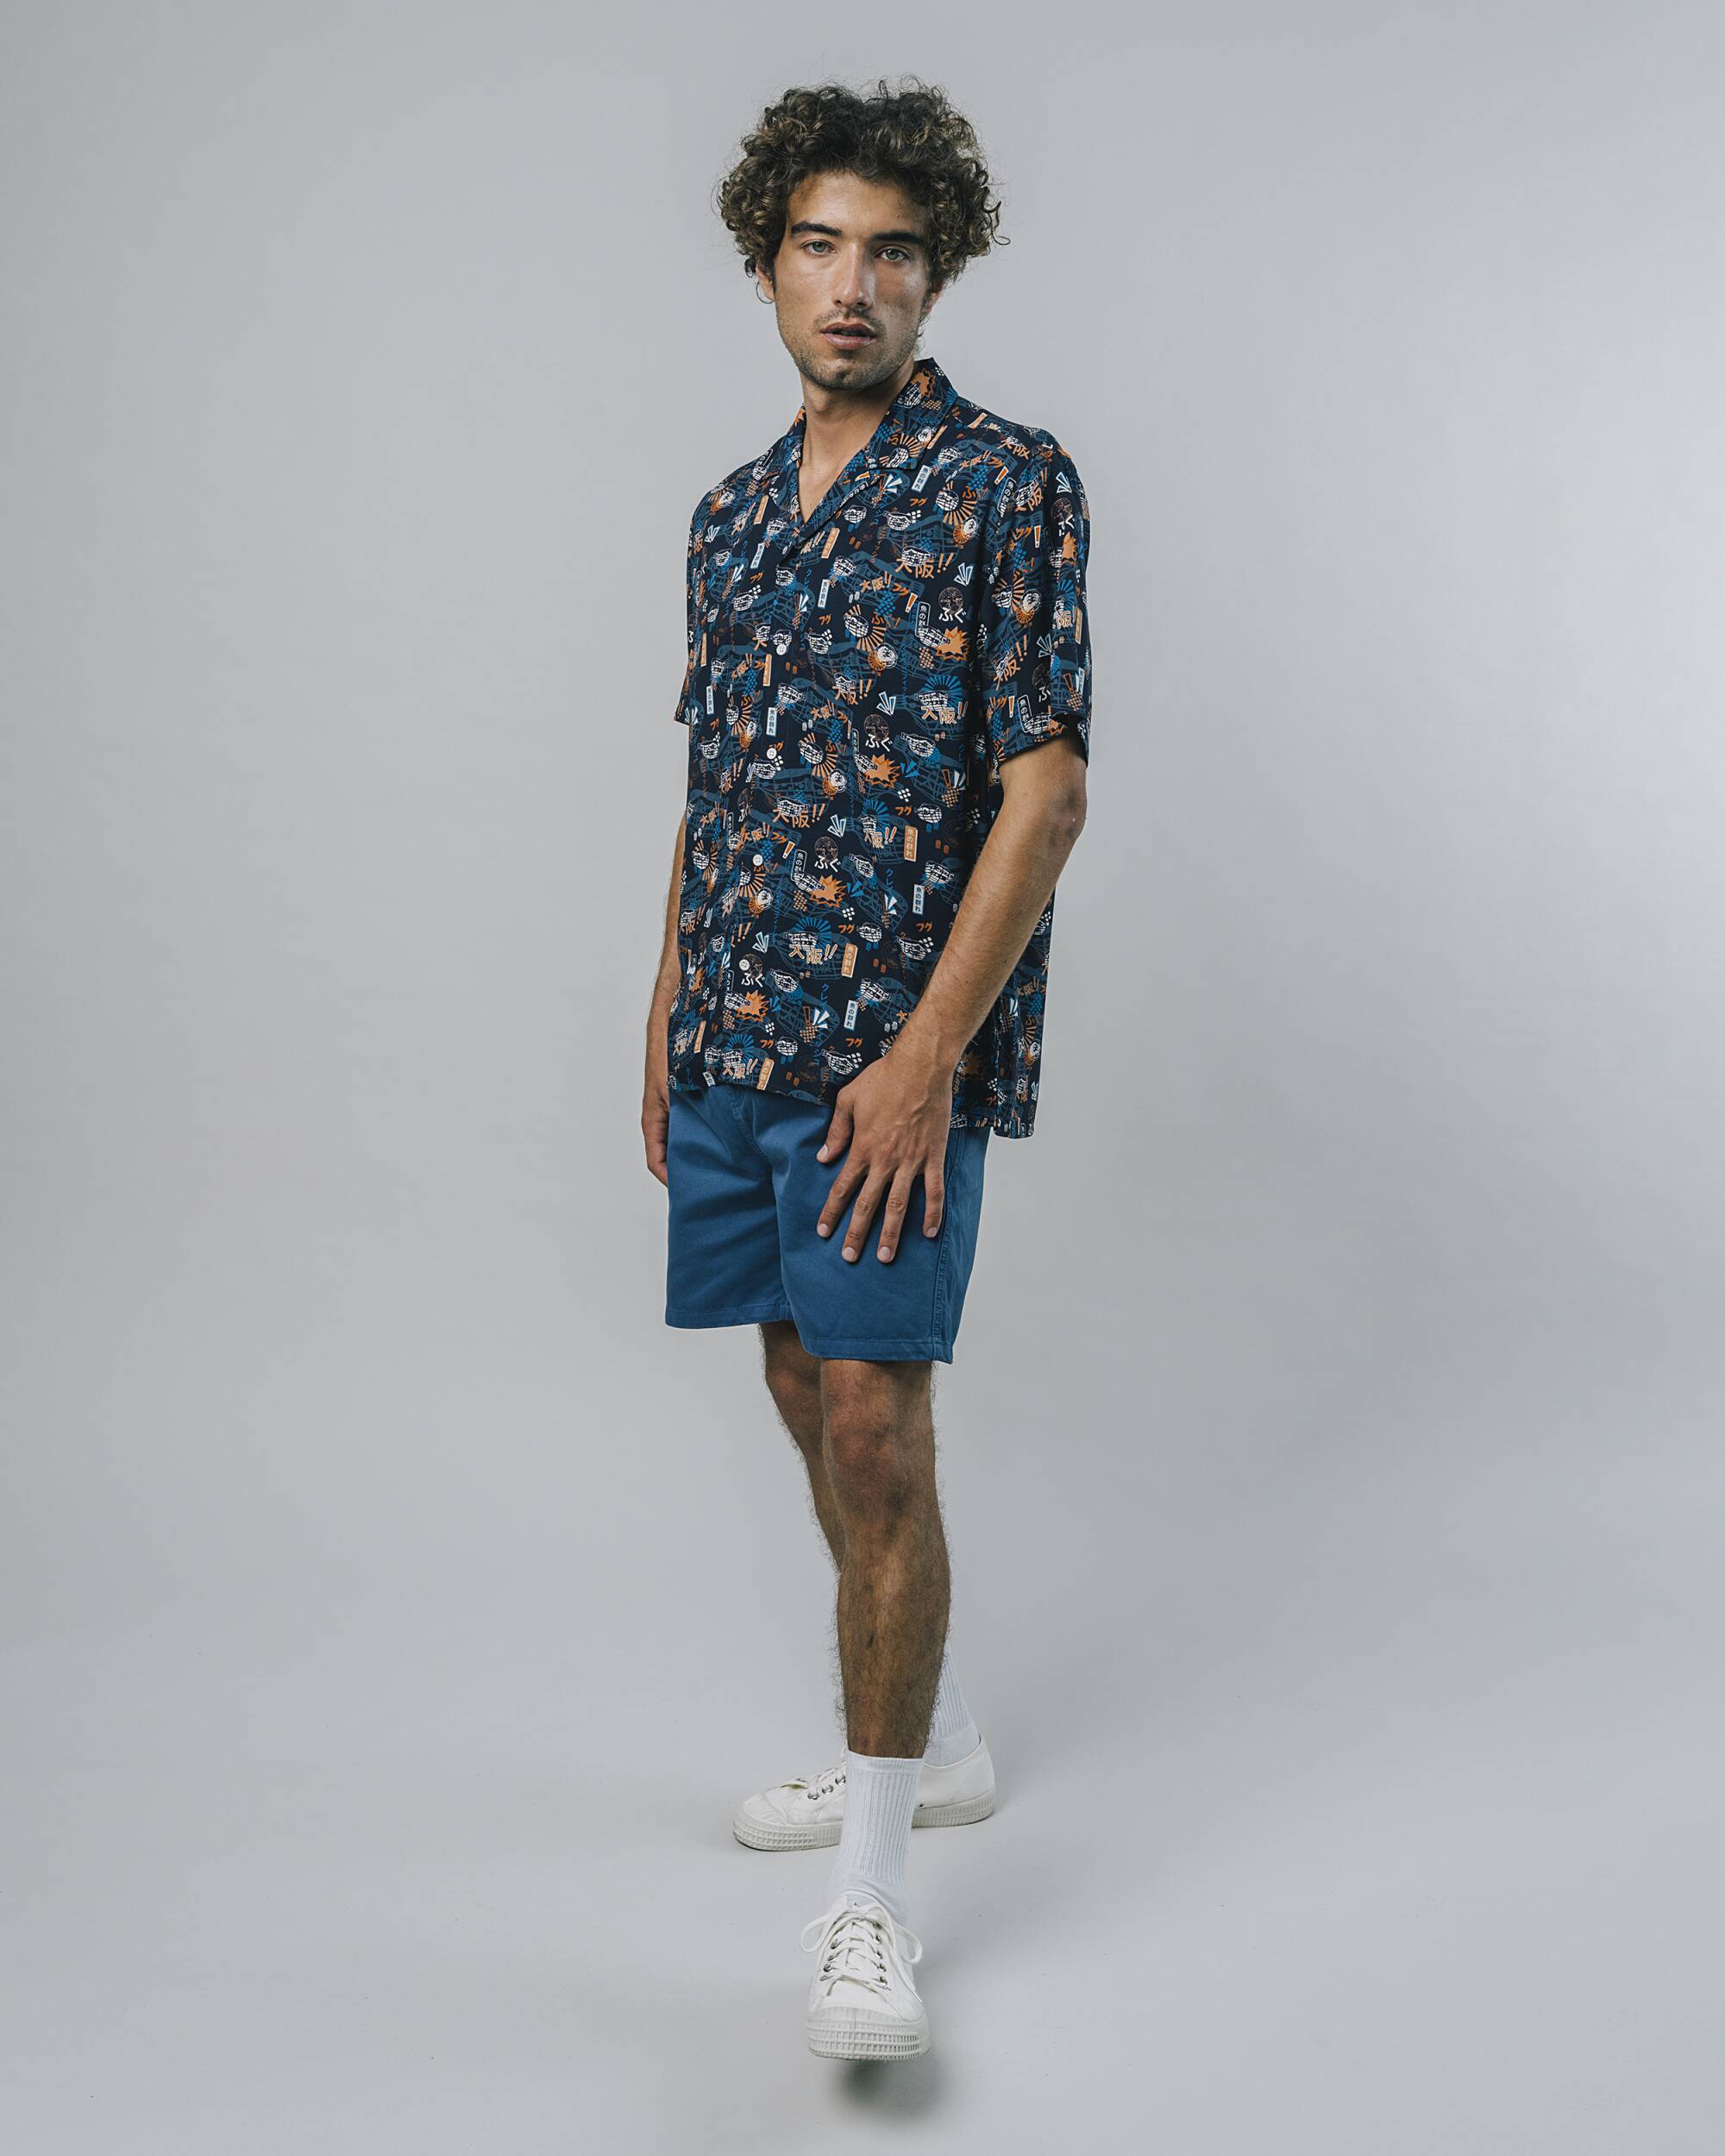 Blue Summer shorts made from 100% organic cotton from Brava Fabrics